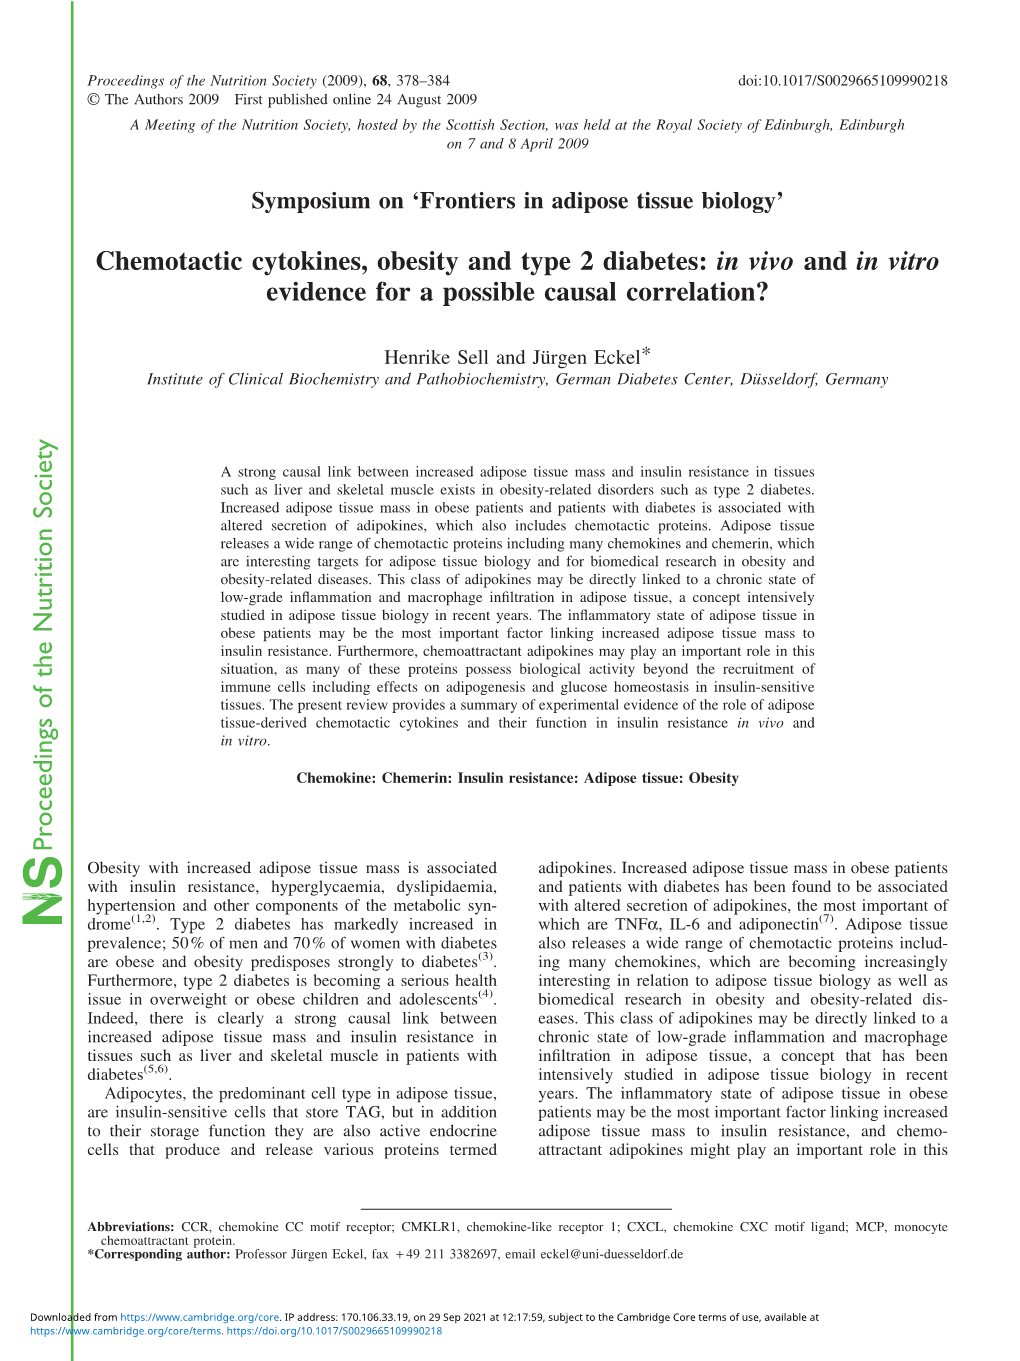 Chemotactic Cytokines, Obesity and Type 2 Diabetes: in Vivo and in Vitro